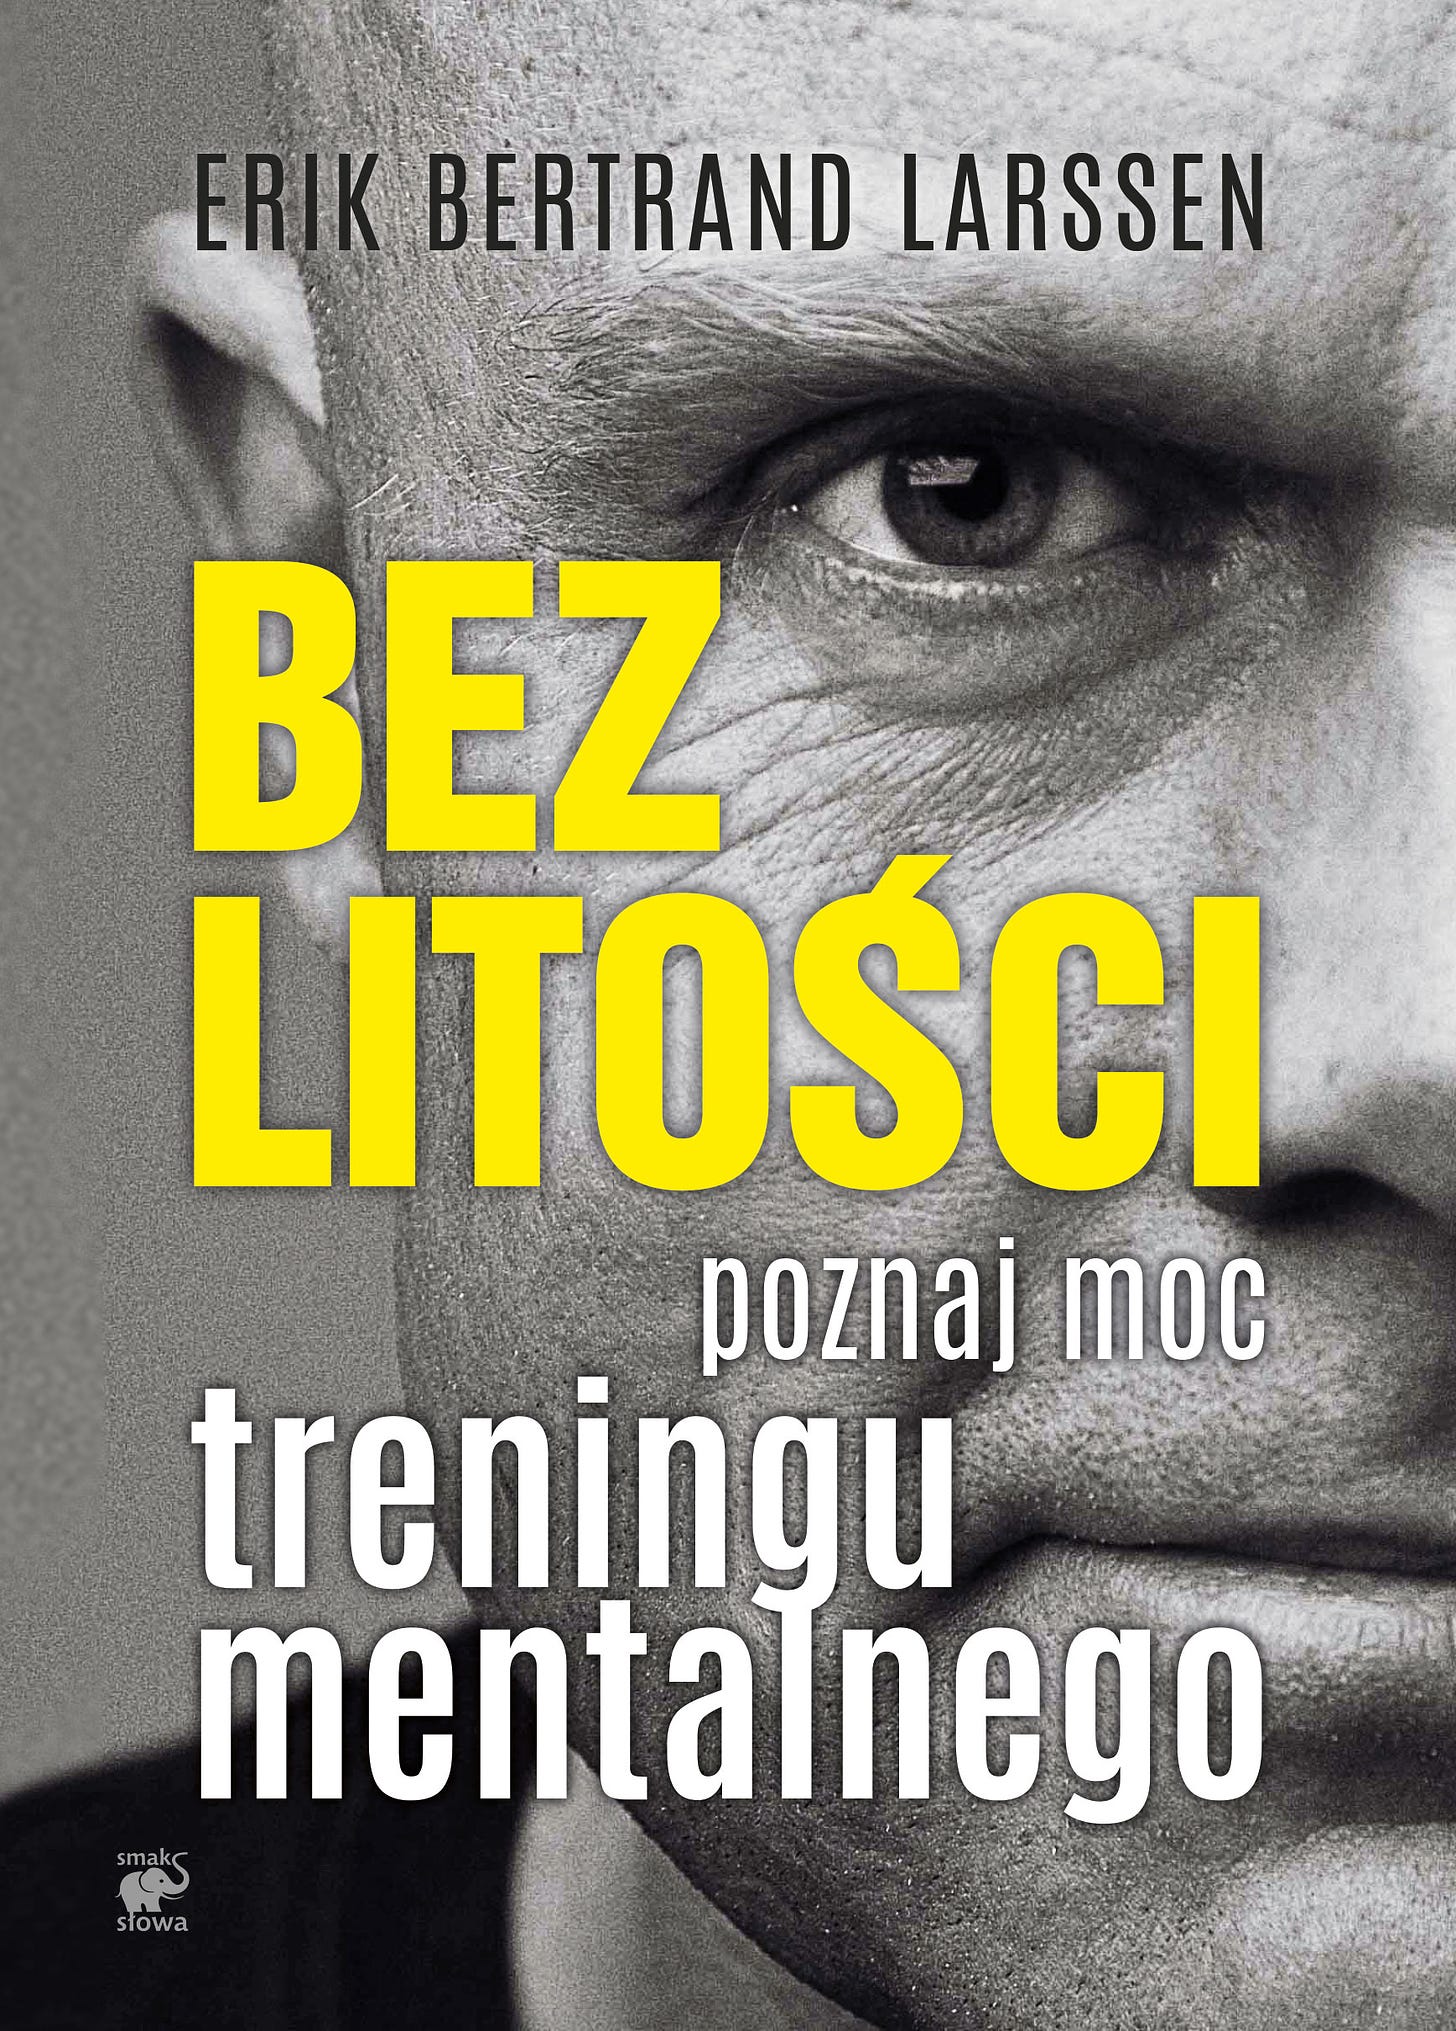 Bez litości (Erik Bertrand Larssen) książka w księgarni TaniaKsiazka.pl